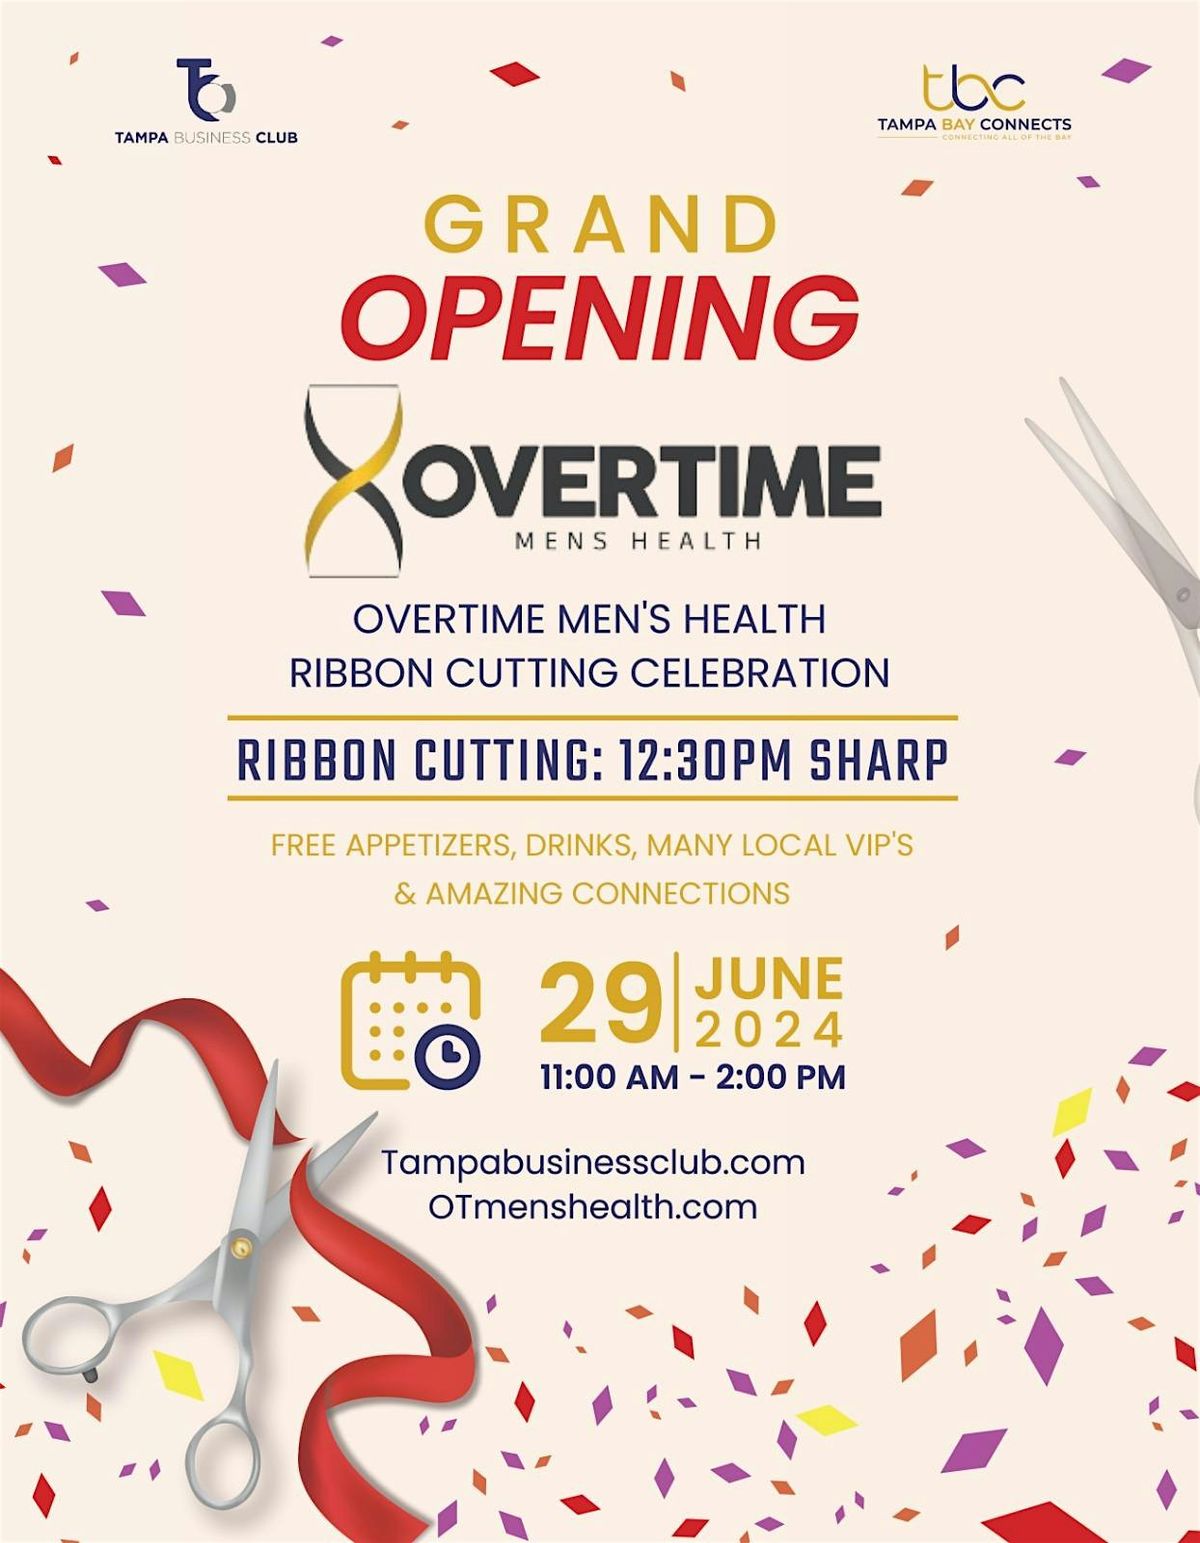 Grand opening & Ribbon Cutting Celebration @ Overtime